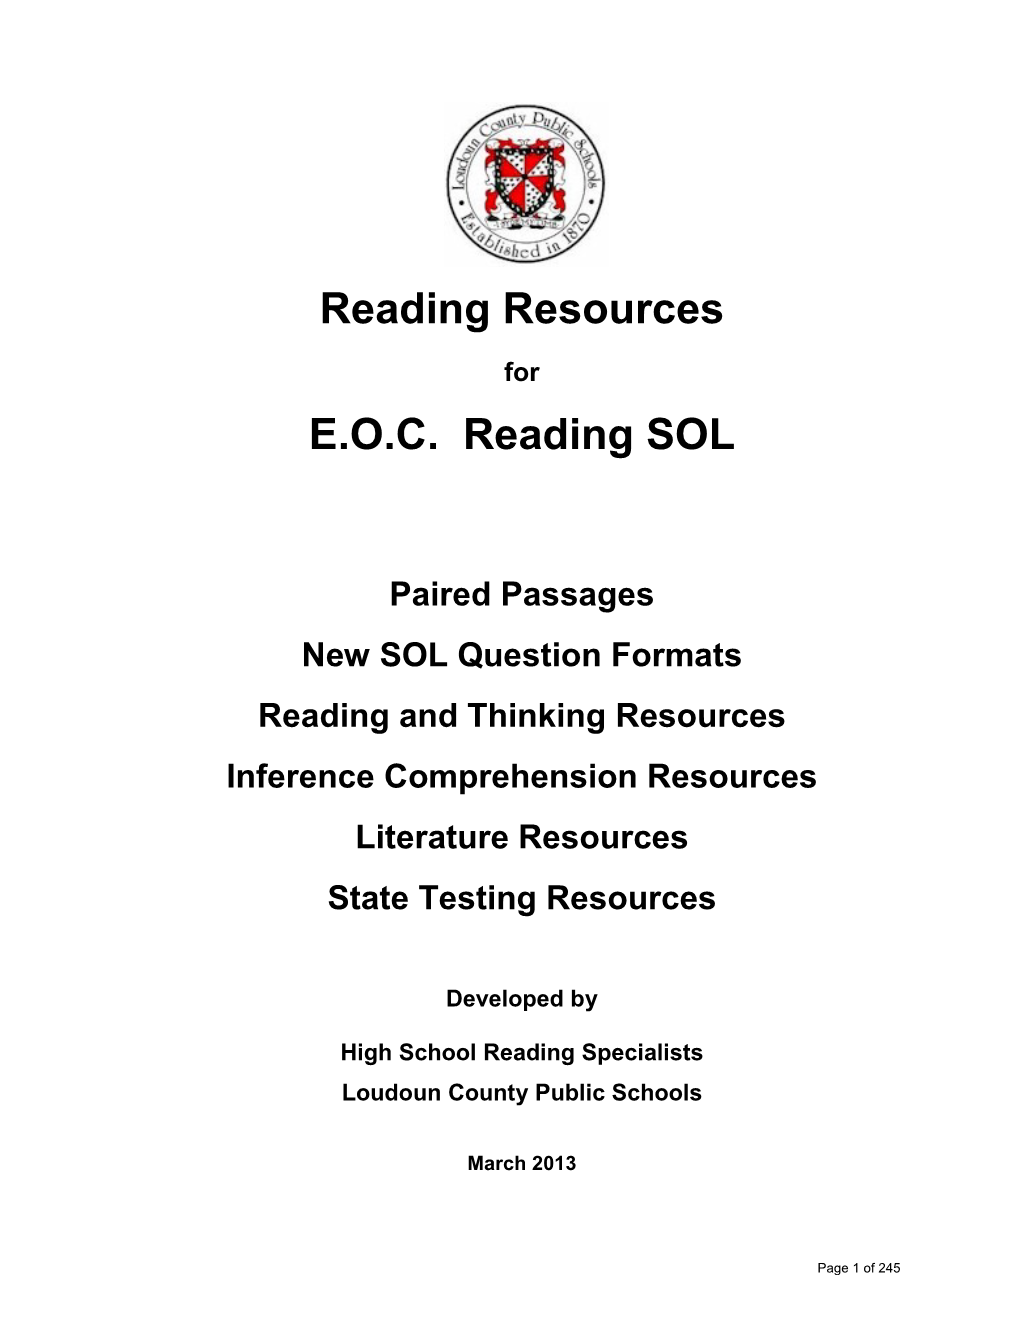 Reading Resources E.O.C. Reading